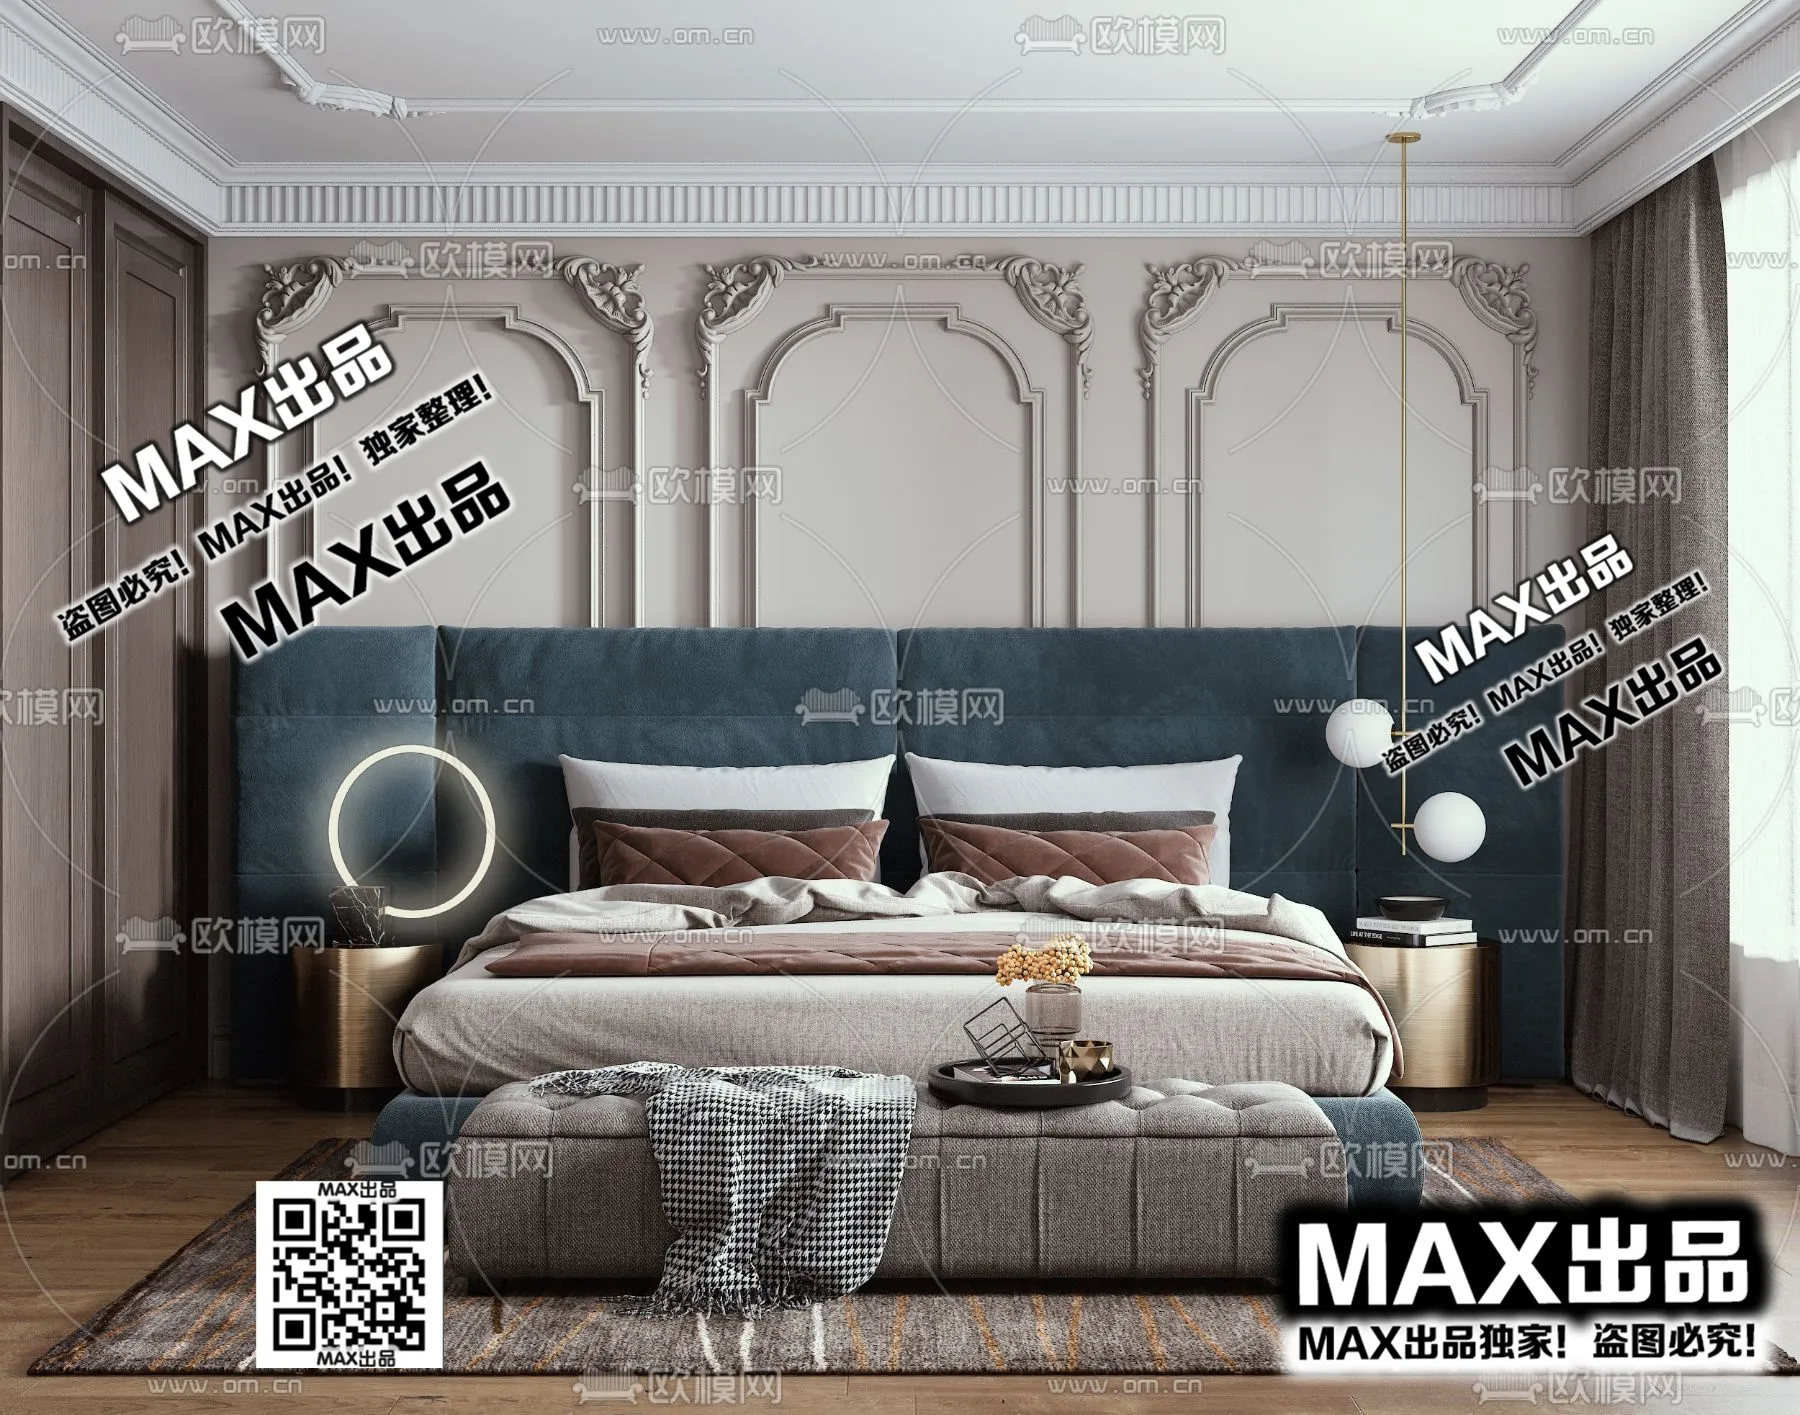 3DS MAX SCENES – LIVING ROOM – 019